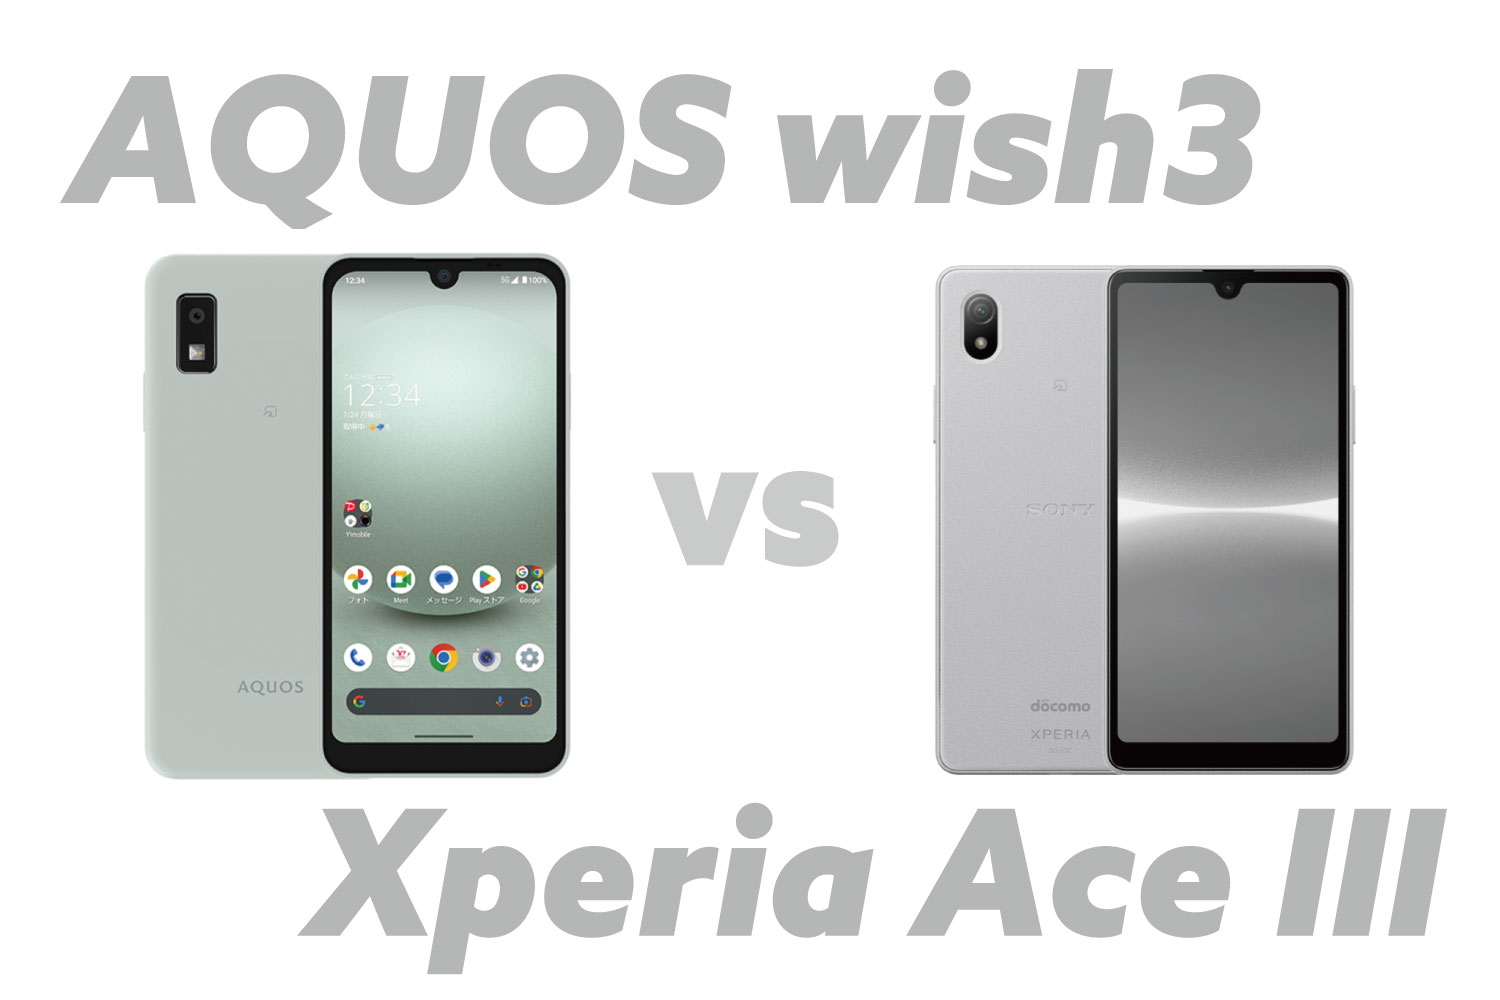 AQUOS wish3 vs Xperia Ace III